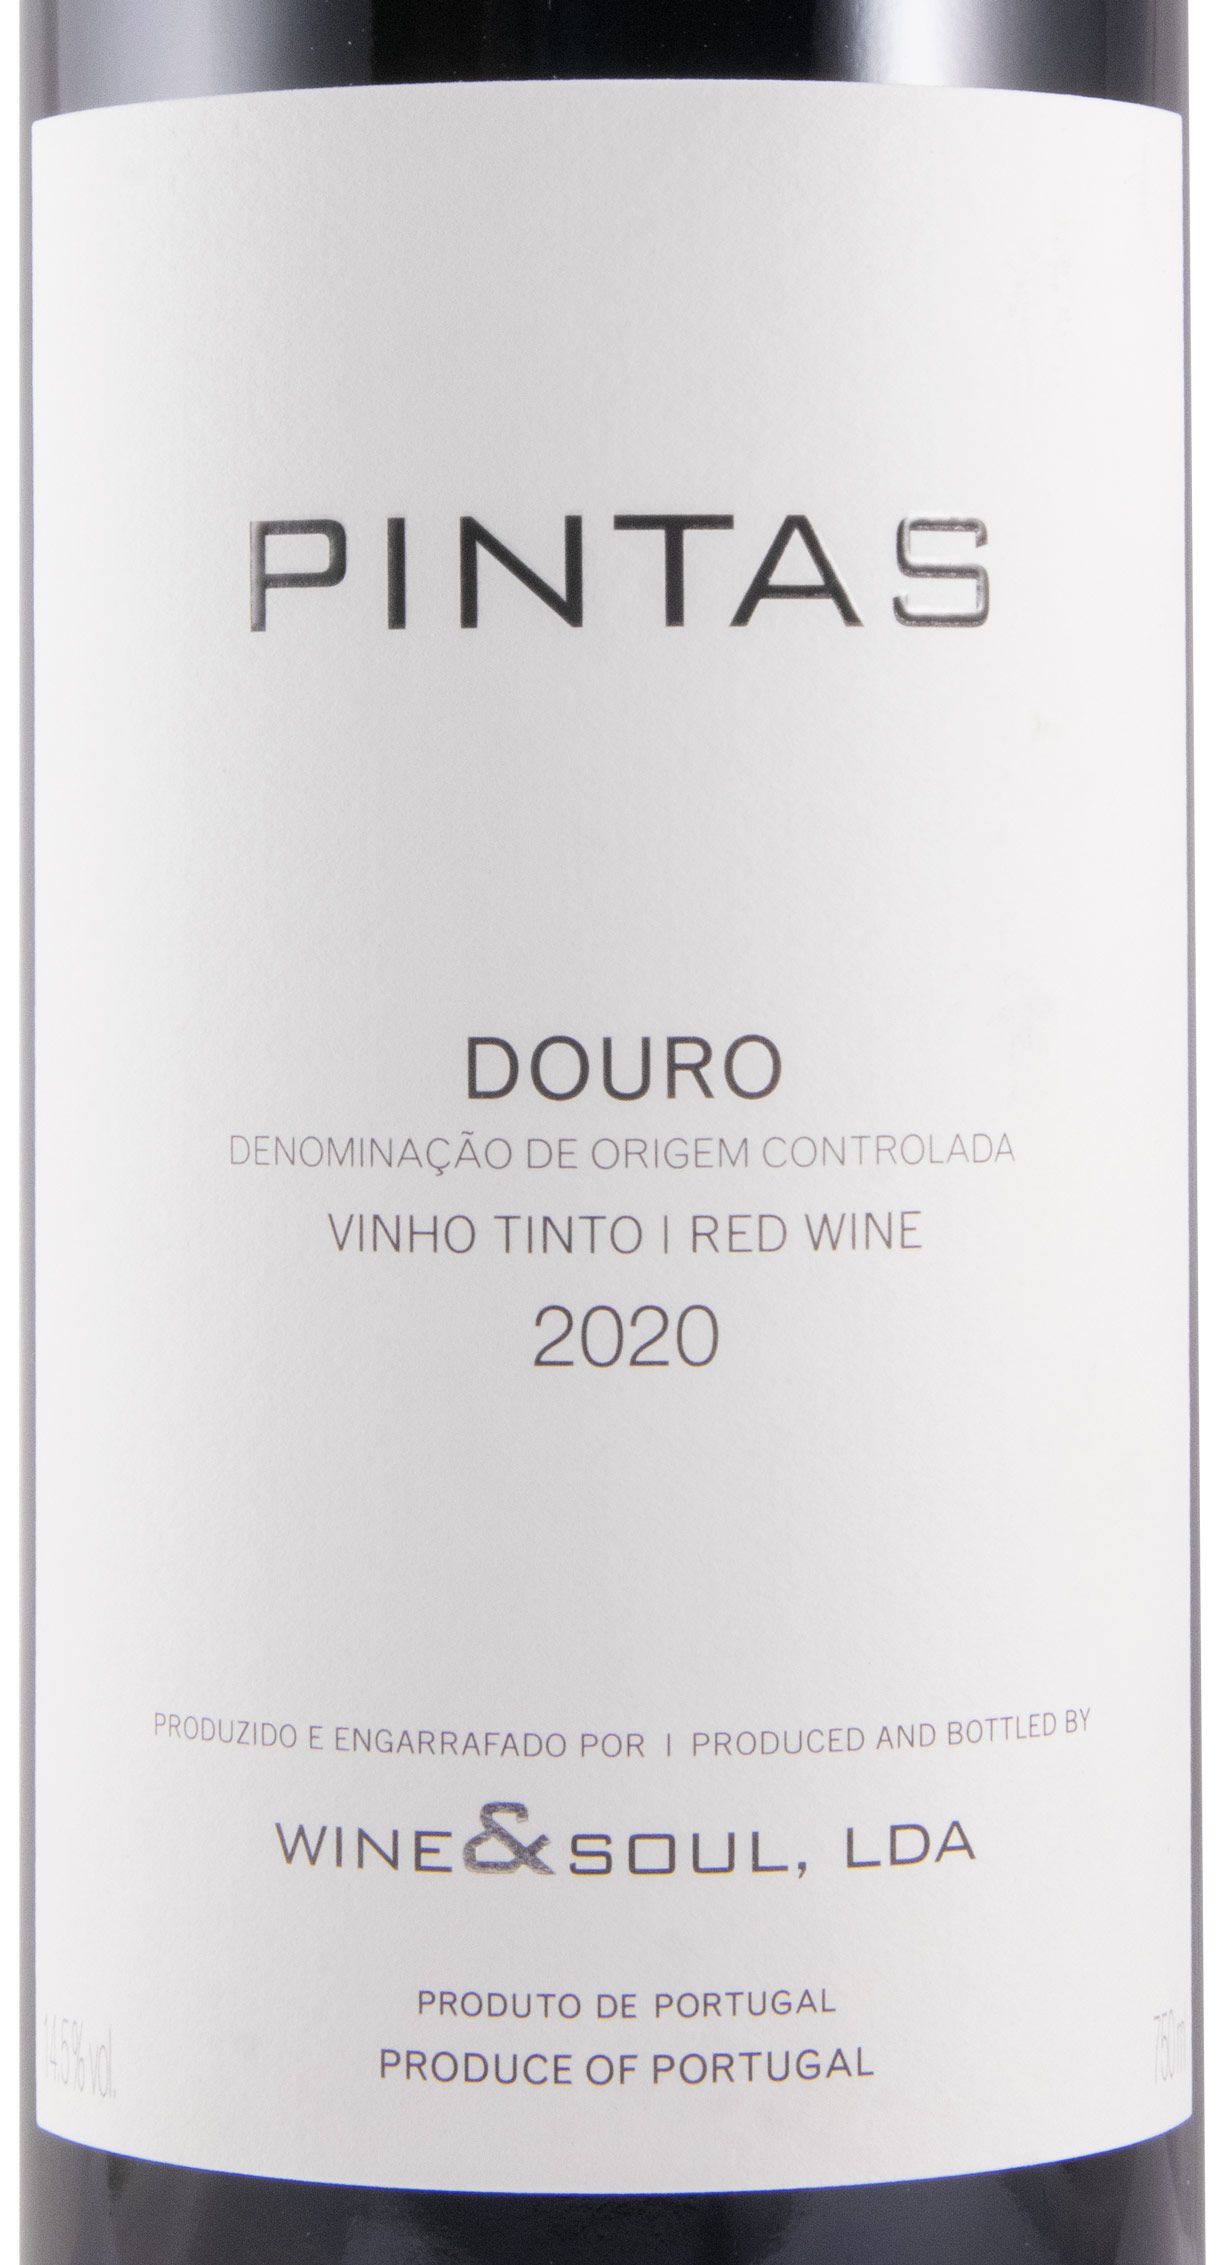 2020 Wine & Soul Pintas tinto